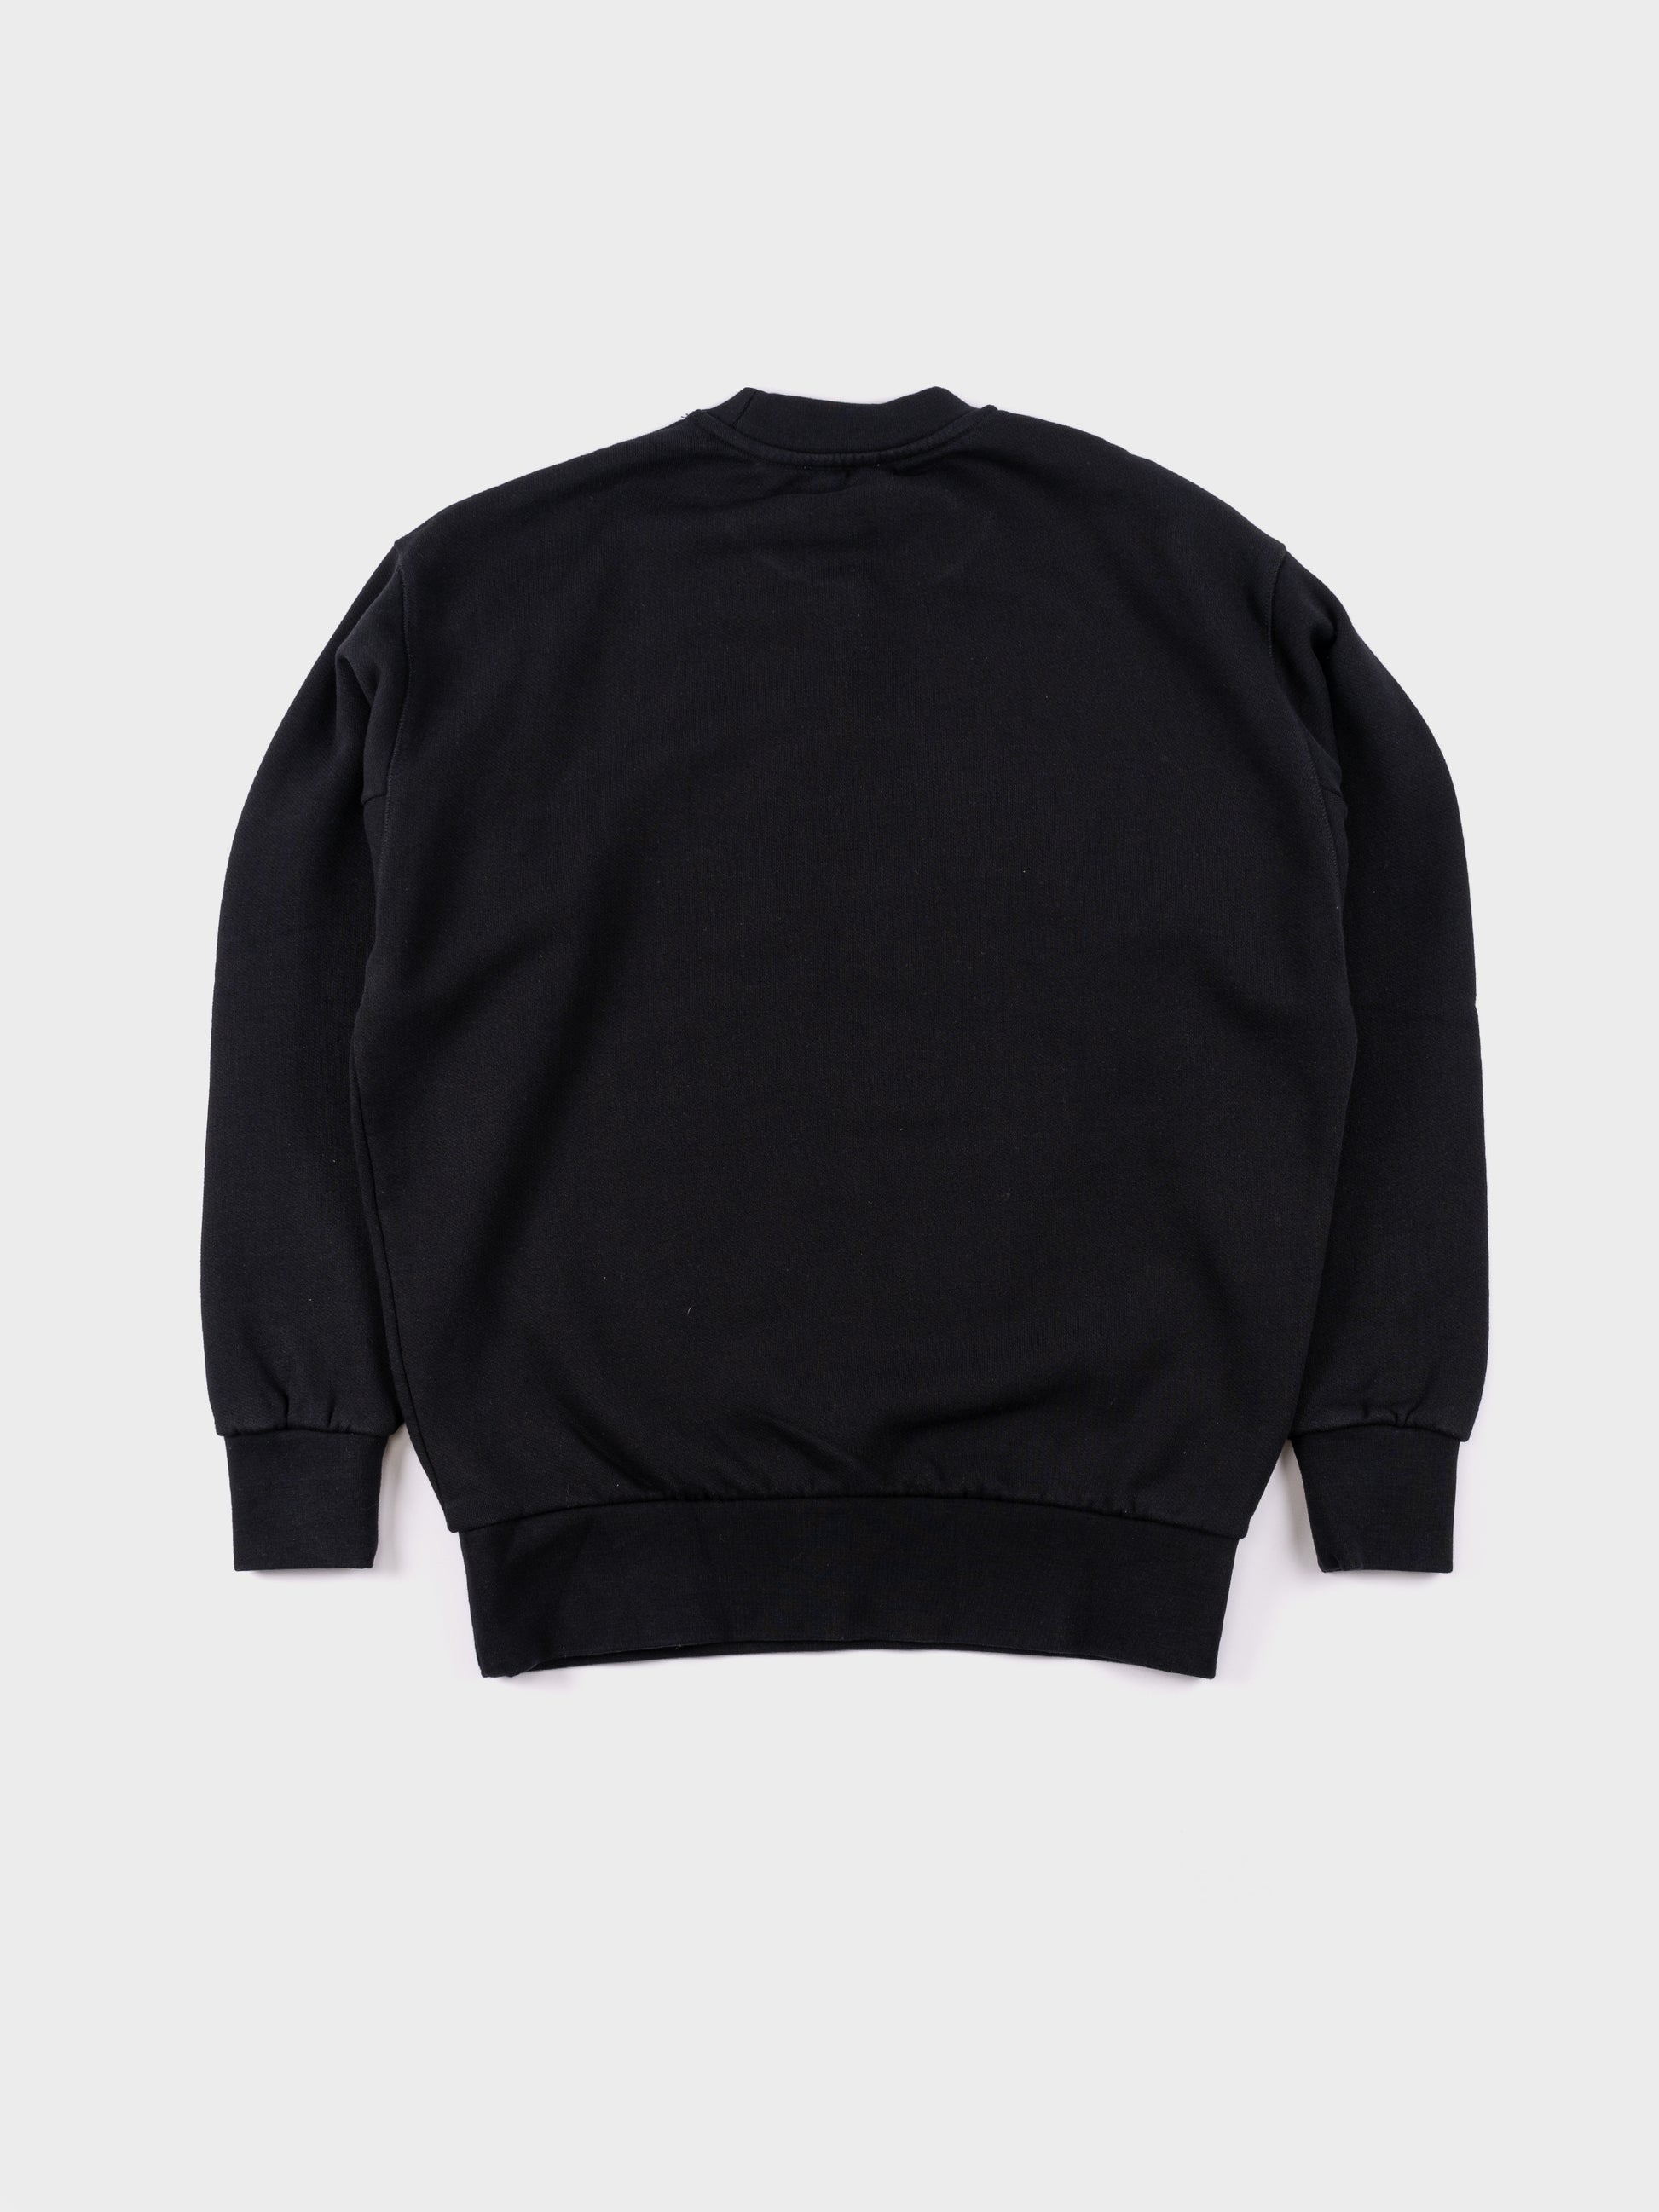 Aries Column Sweatshirt - Black